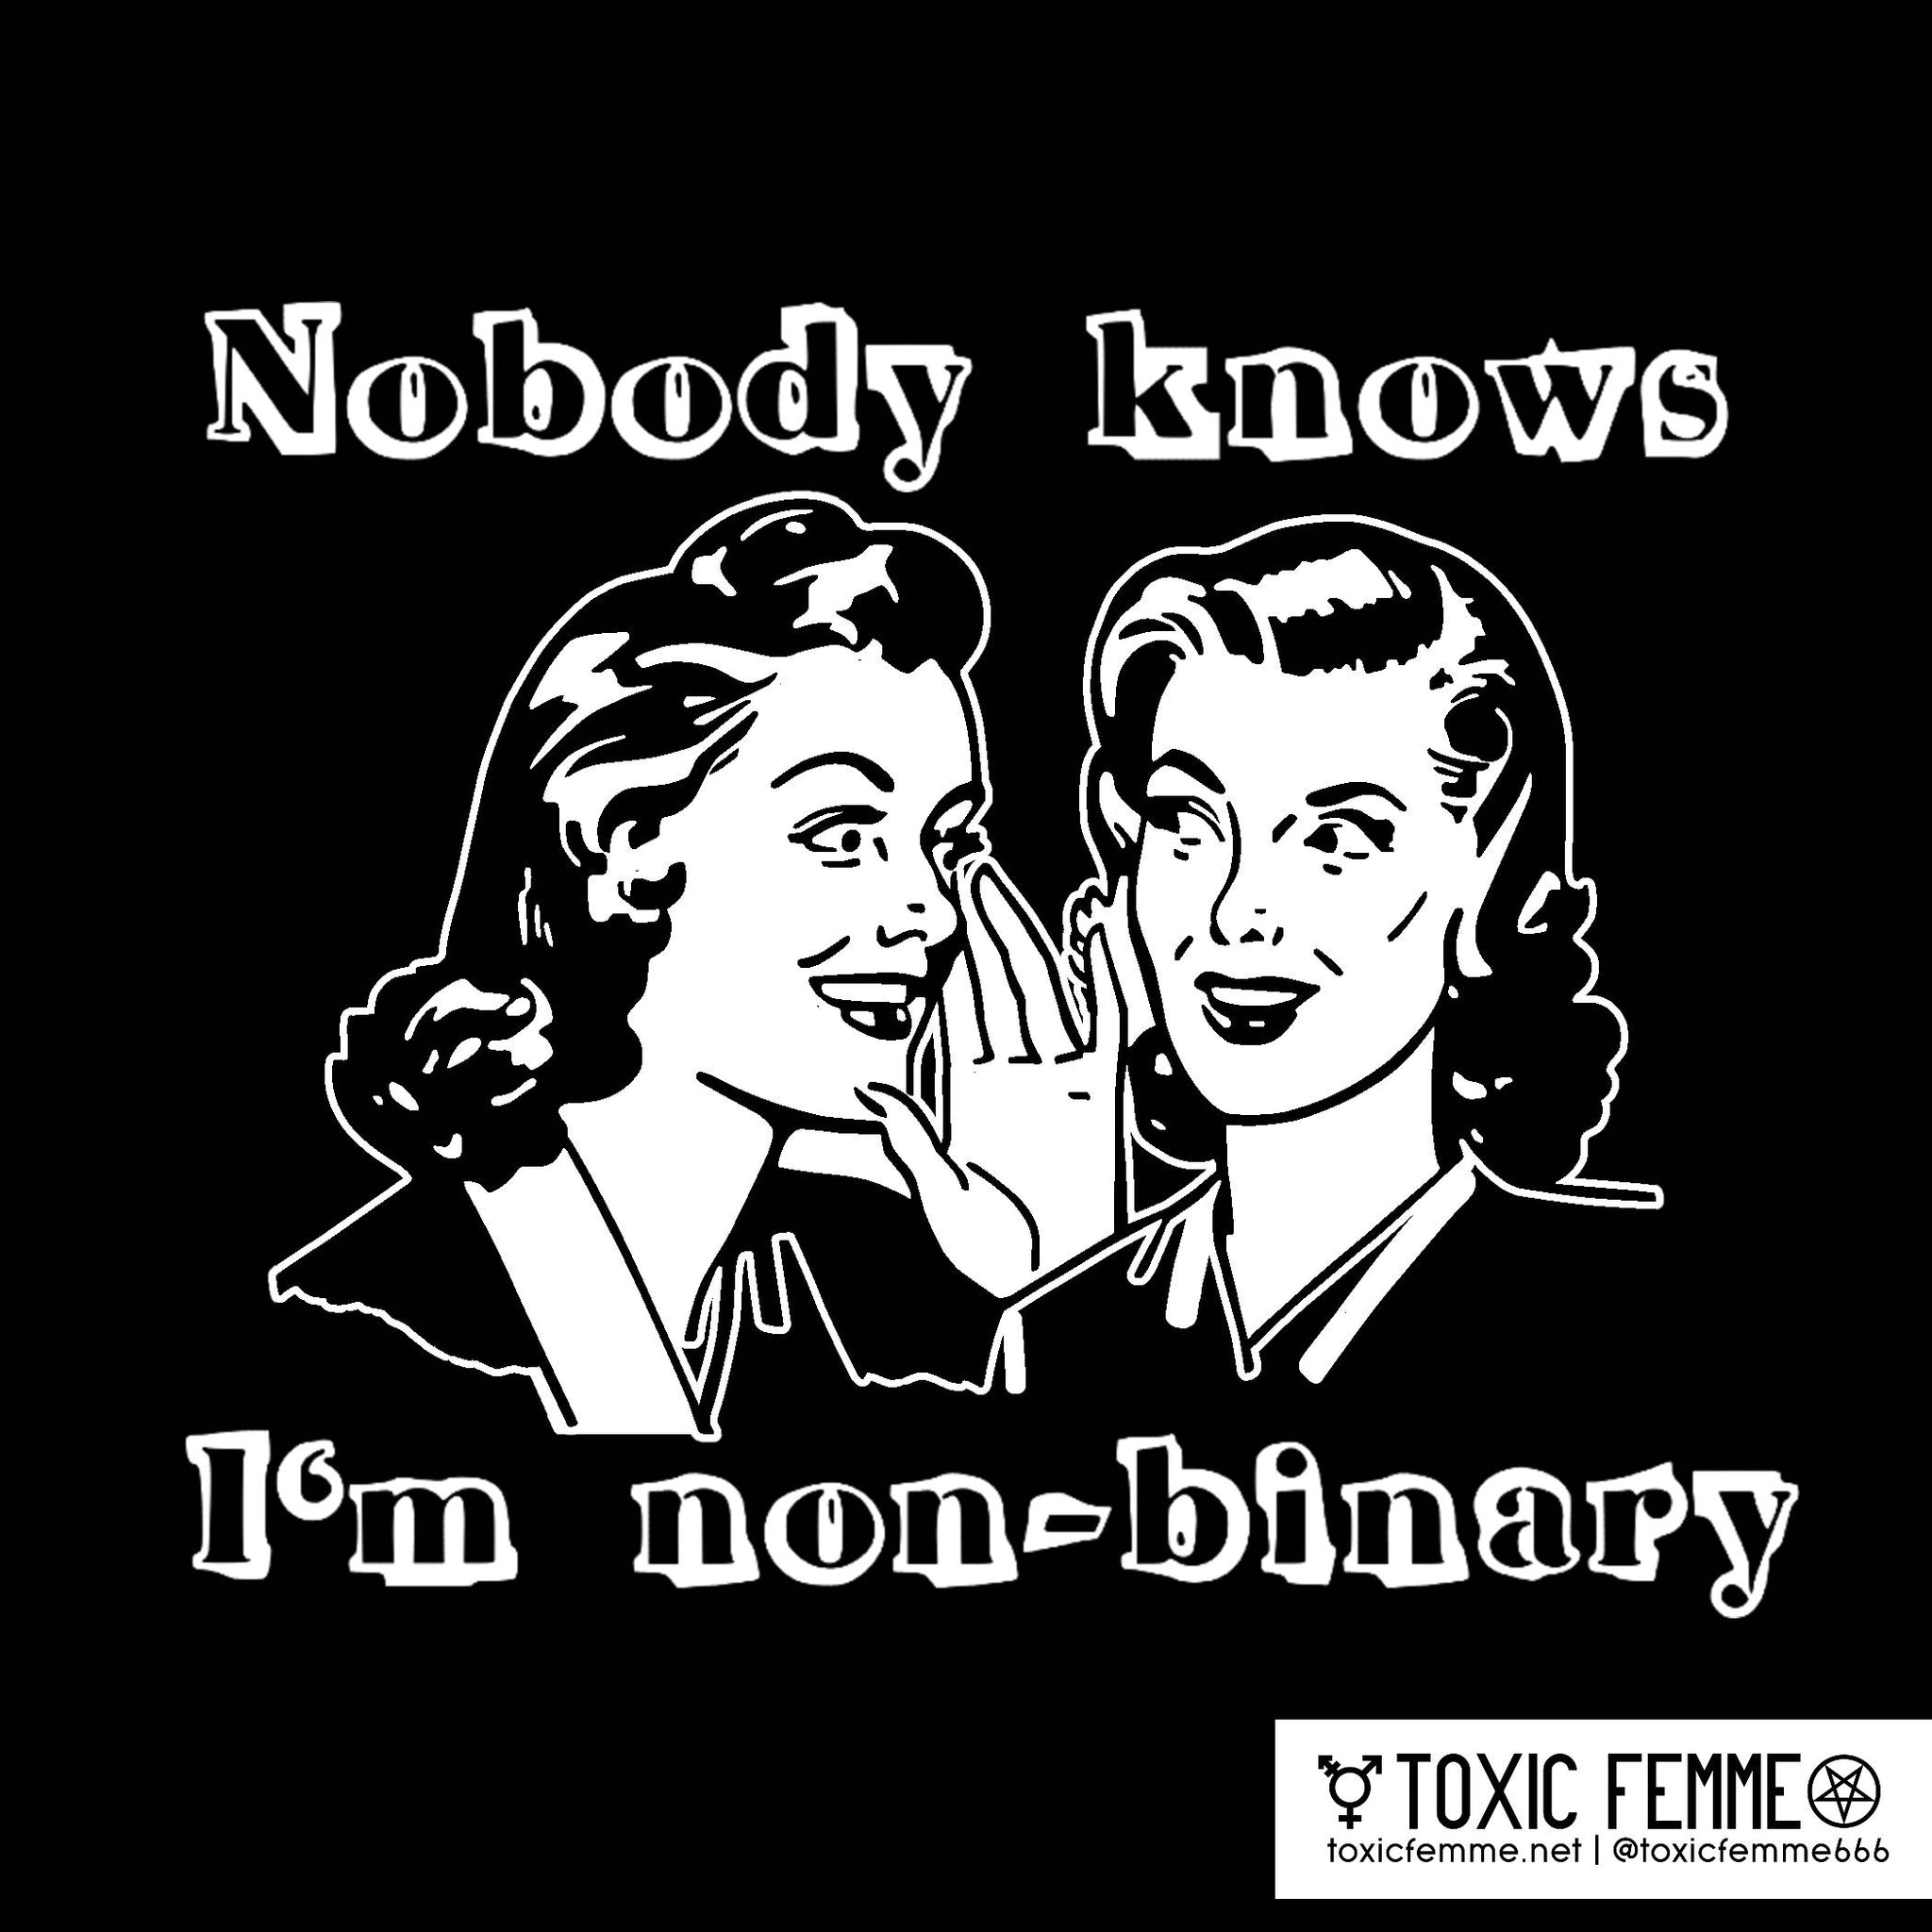 enby,non_binary,nonbinary,genderqueer,gender,genderfluid,they_them,pronouns,trans,transgender,lgbtq,lgbt,queer